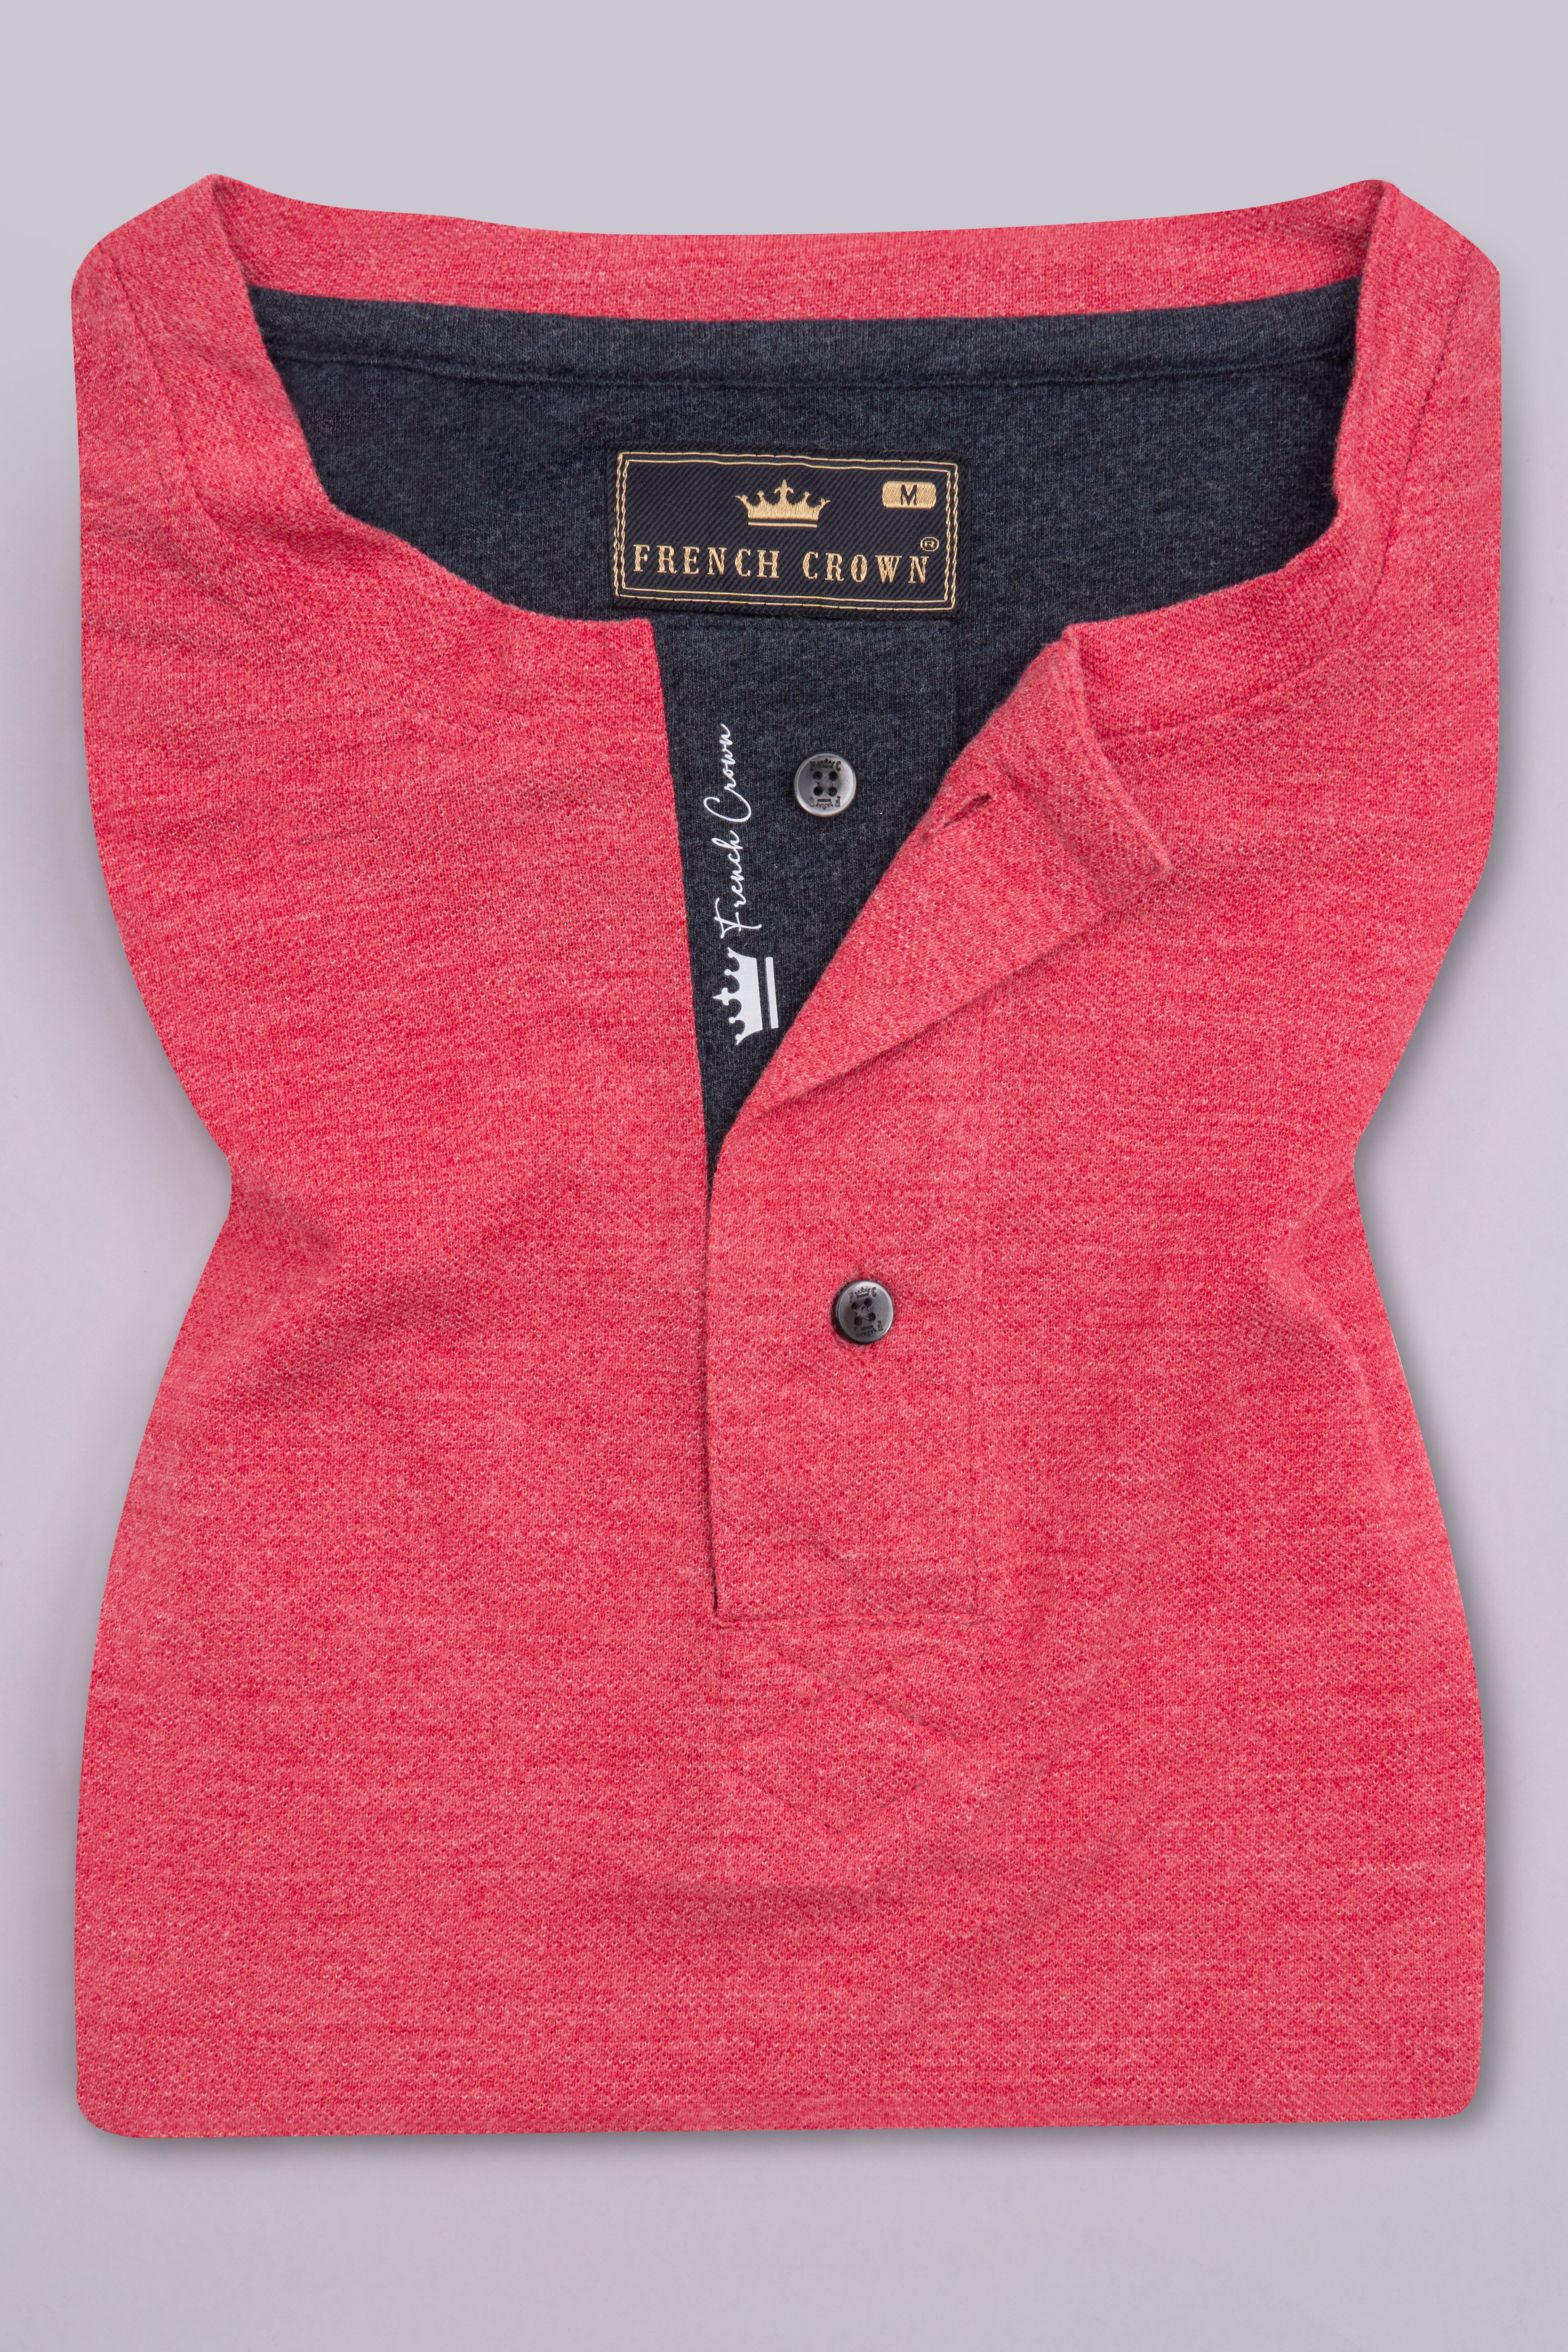 Cranberry Red Premium Cotton Round Neck Pique T-Shirt TS900-S, TS900-M, TS900-L, TS900-XL, TS900-XXL